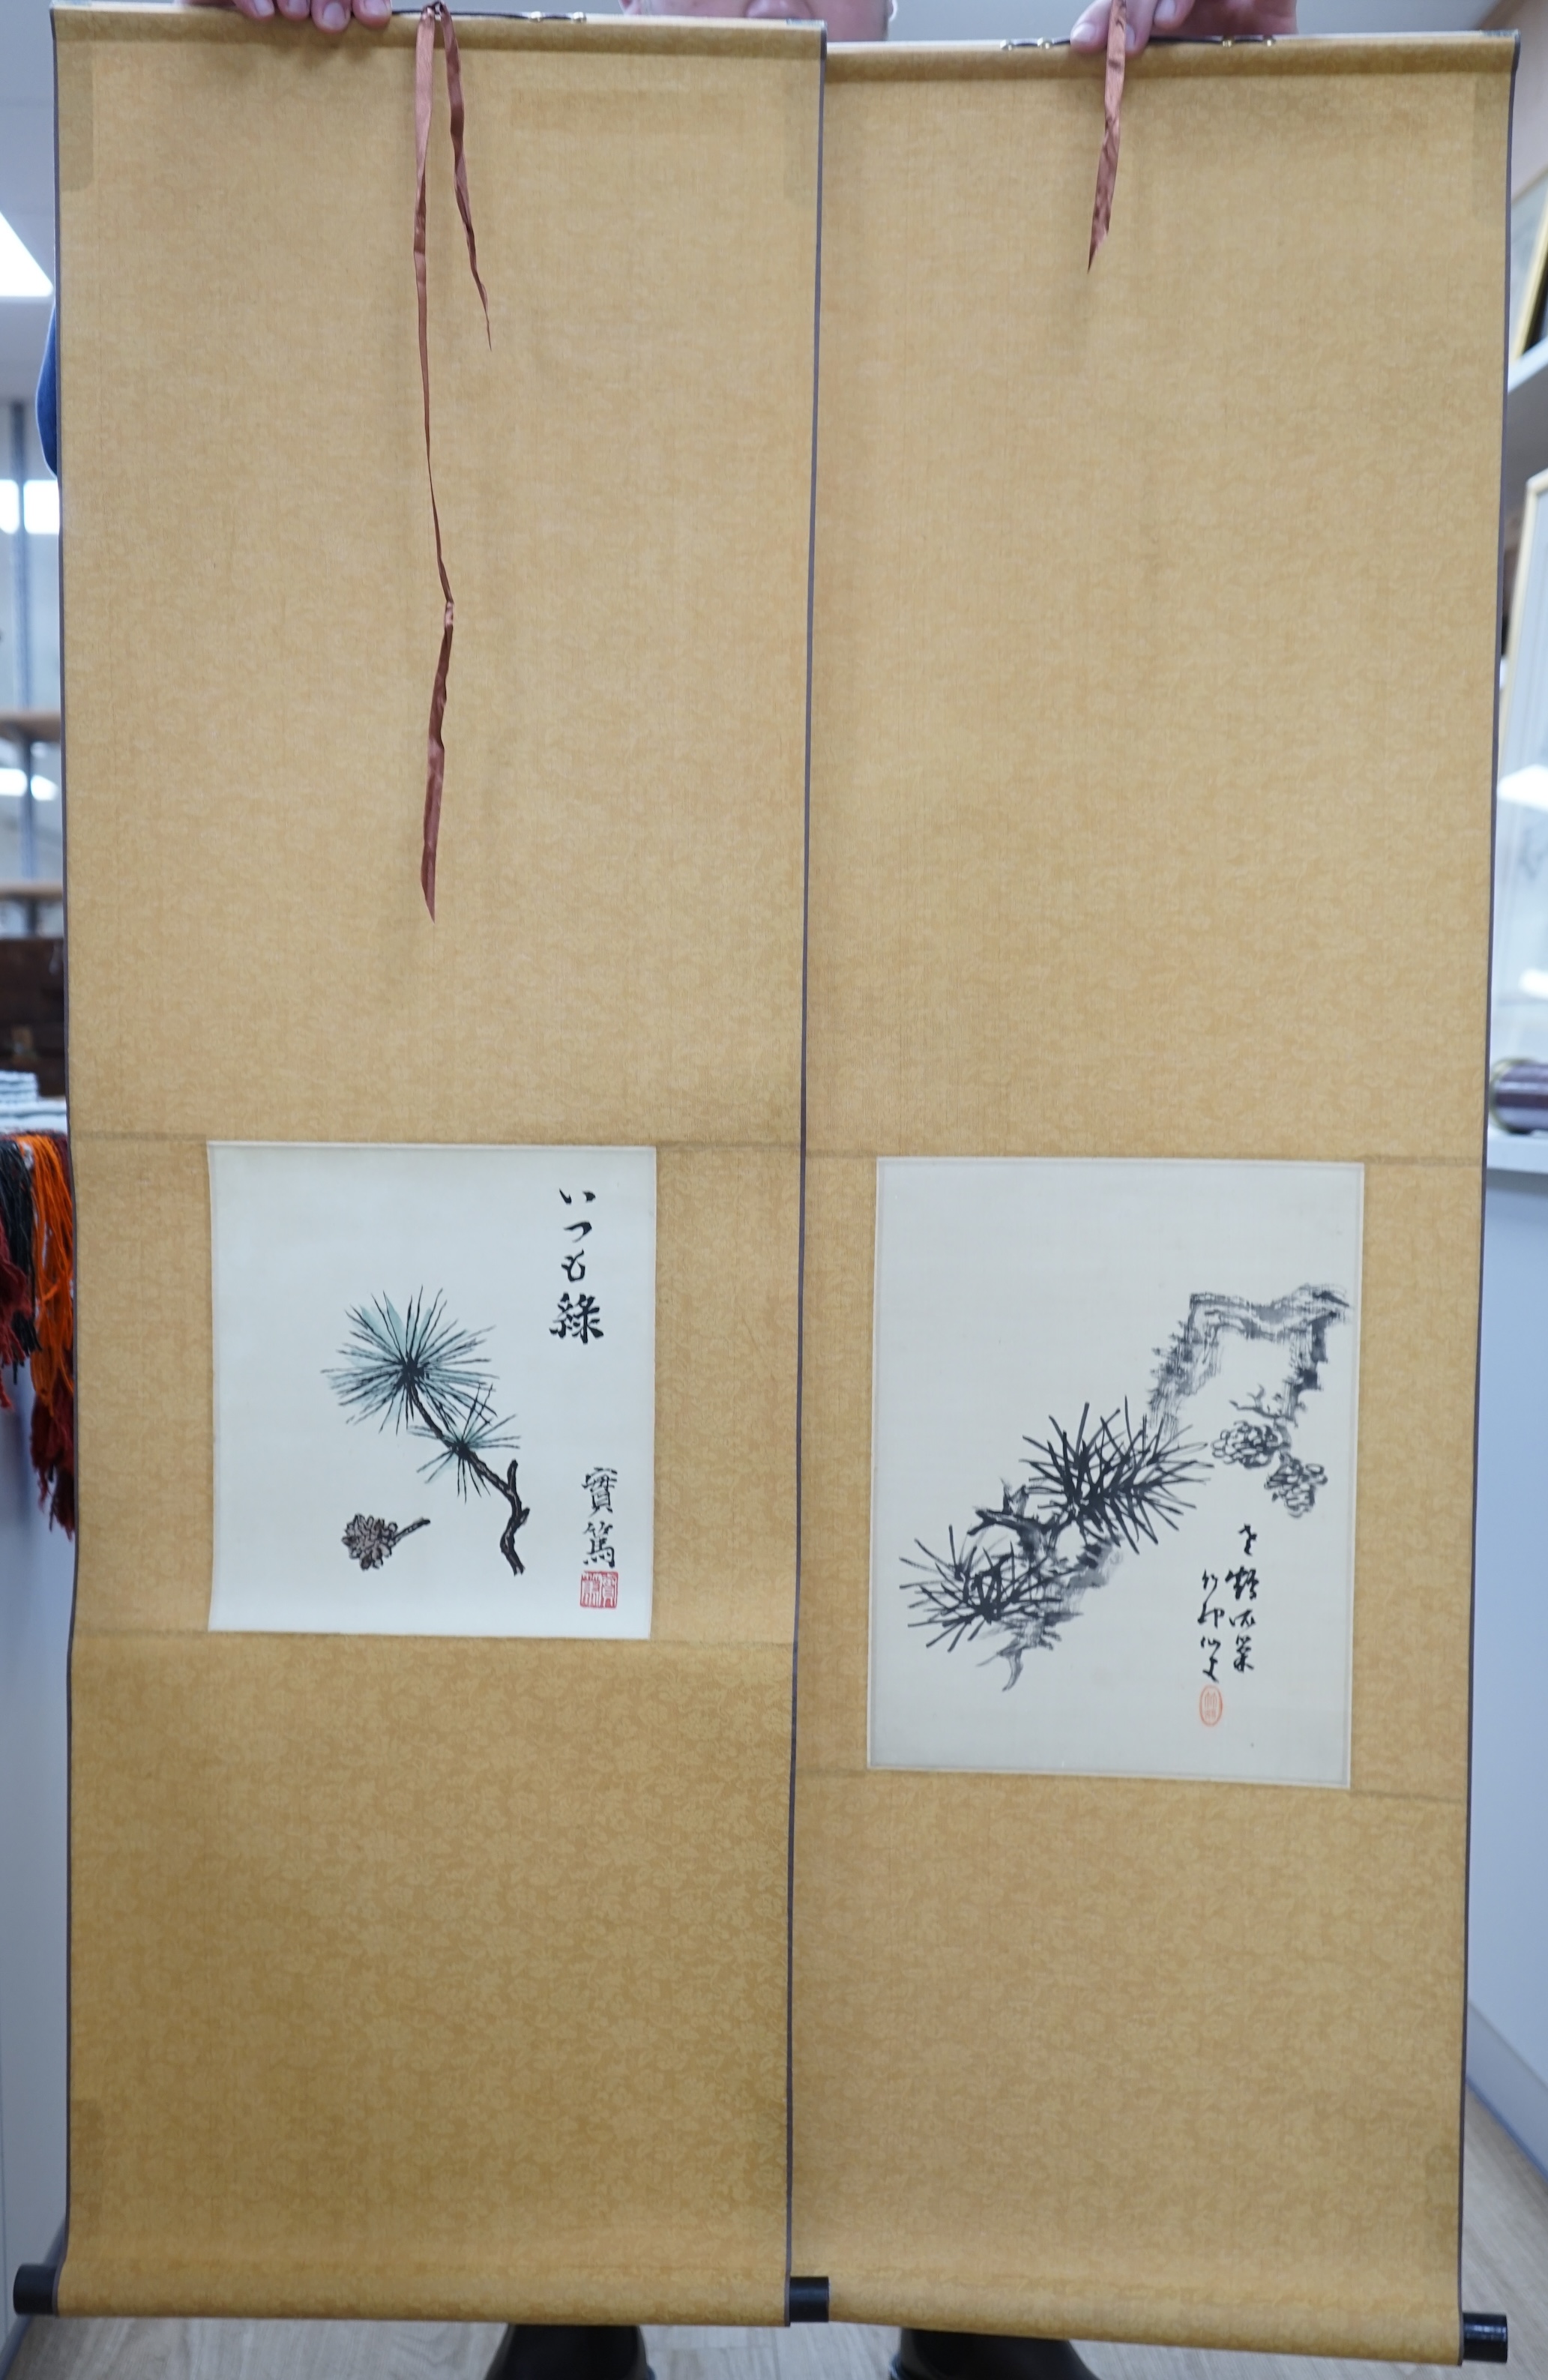 Chikusen, woodblock printed scroll, Pine-Hasu Branch and Saneatsu Mushakoji, boxed, largest 34 x 26cm. Condition- fair to good, some light staining